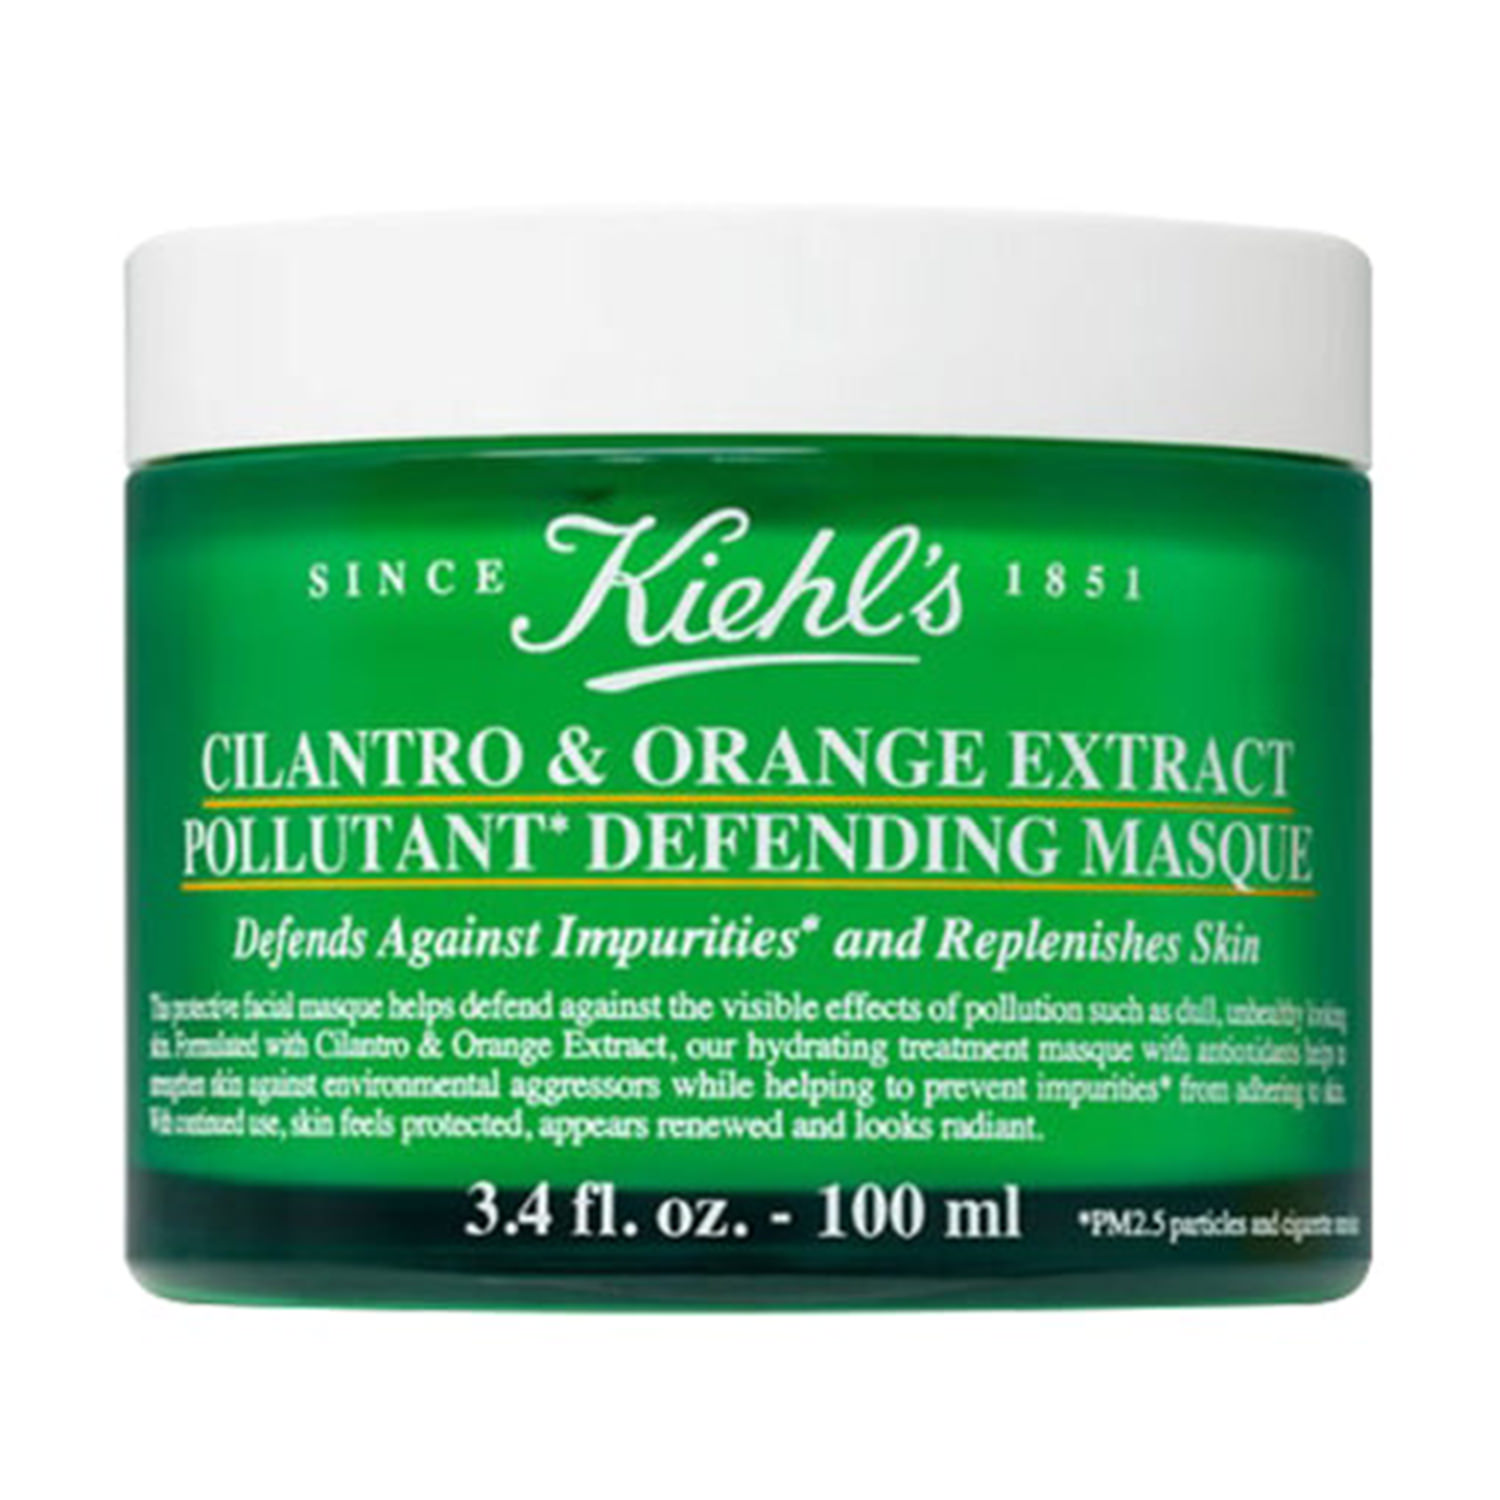 Mặt nạ ngủ thải độc Kiehl’s Cilantro & Orange Extract Pollutant Defending Masque